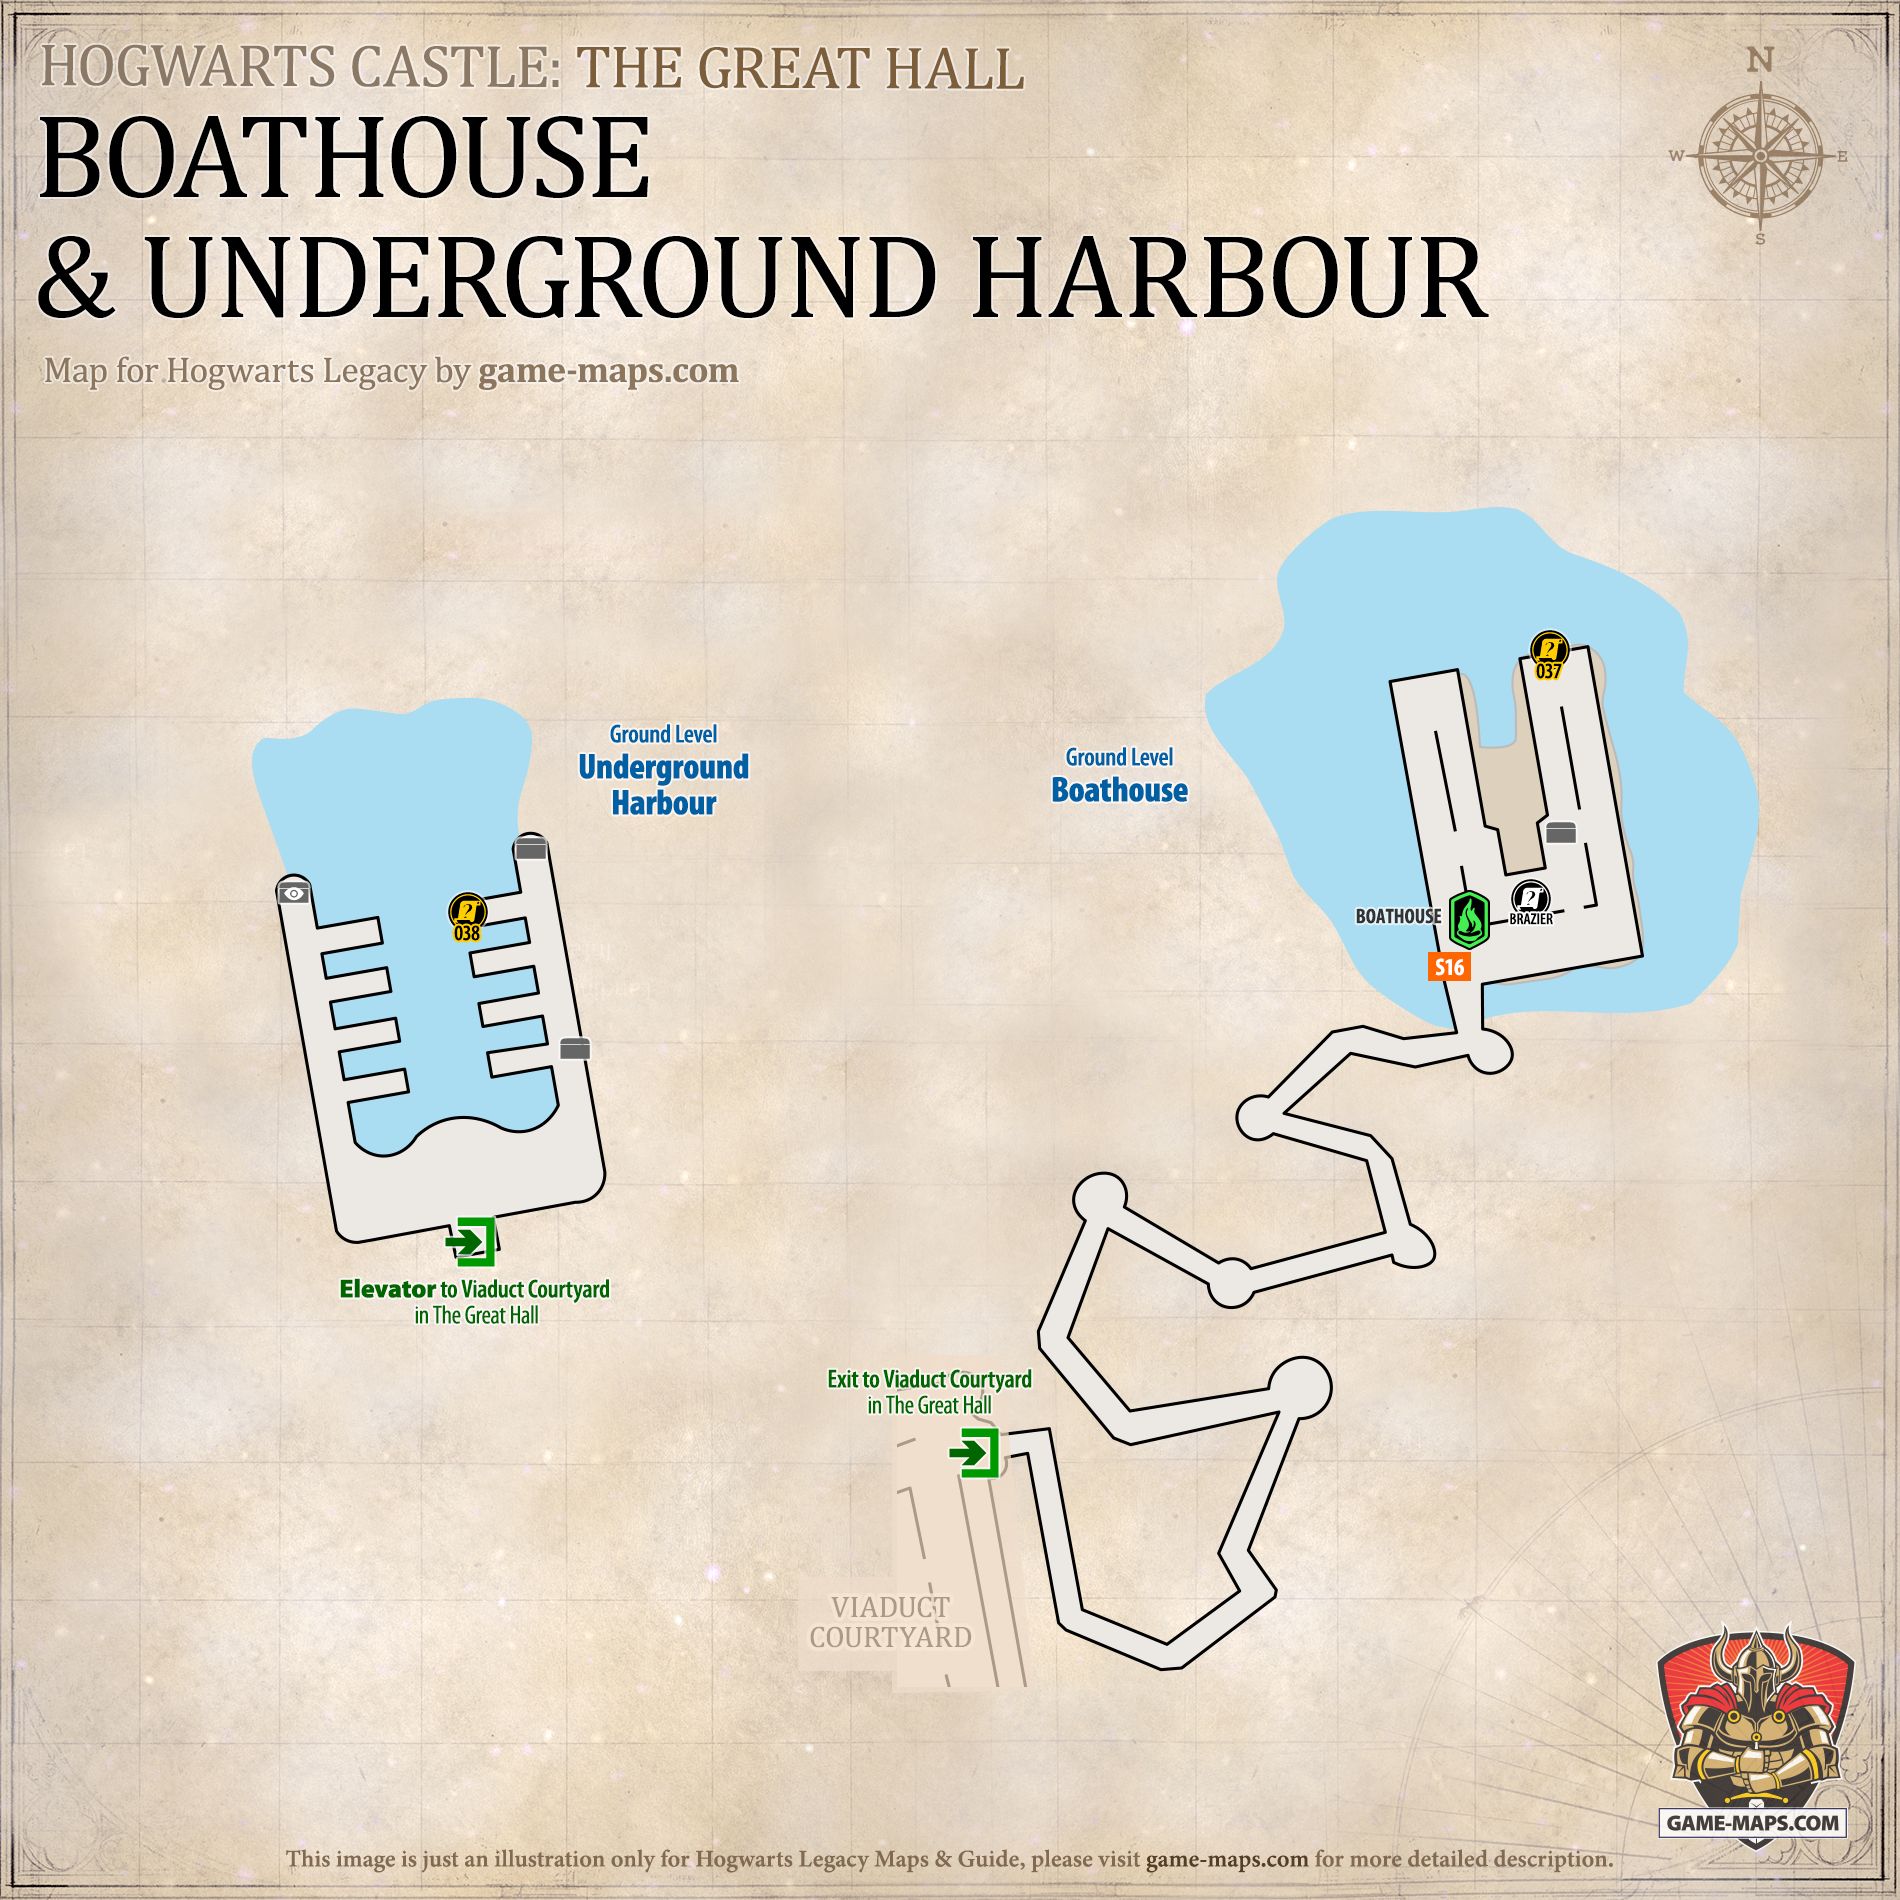 Boathouse & Underground Harbour Poudlard